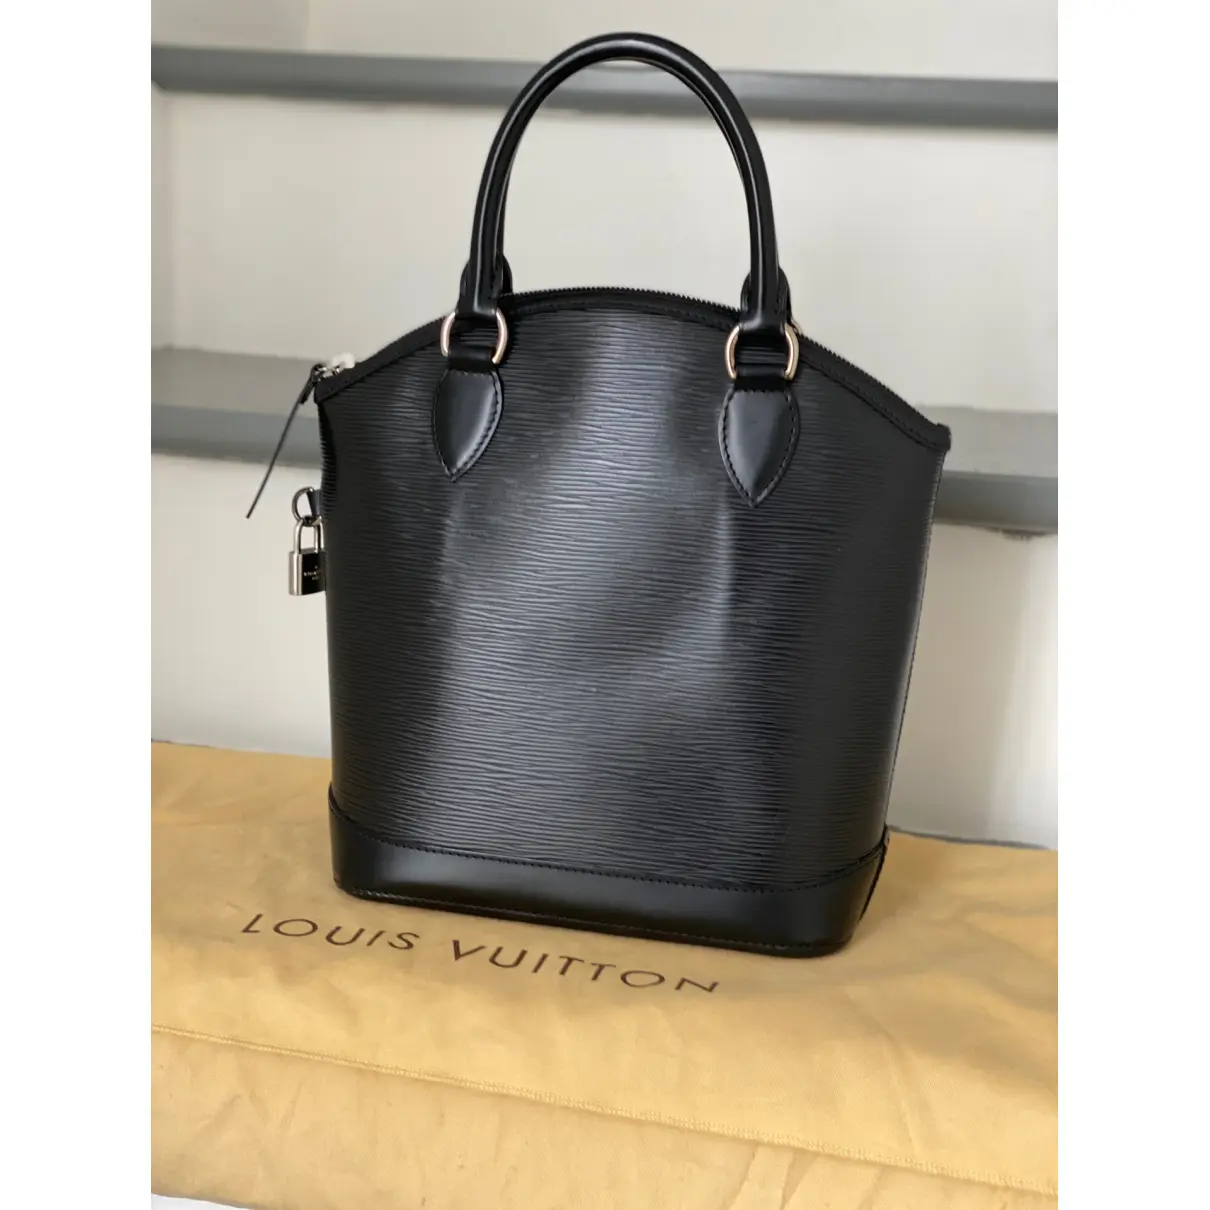 Buy Louis Vuitton Lockit Vertical leather handbag online